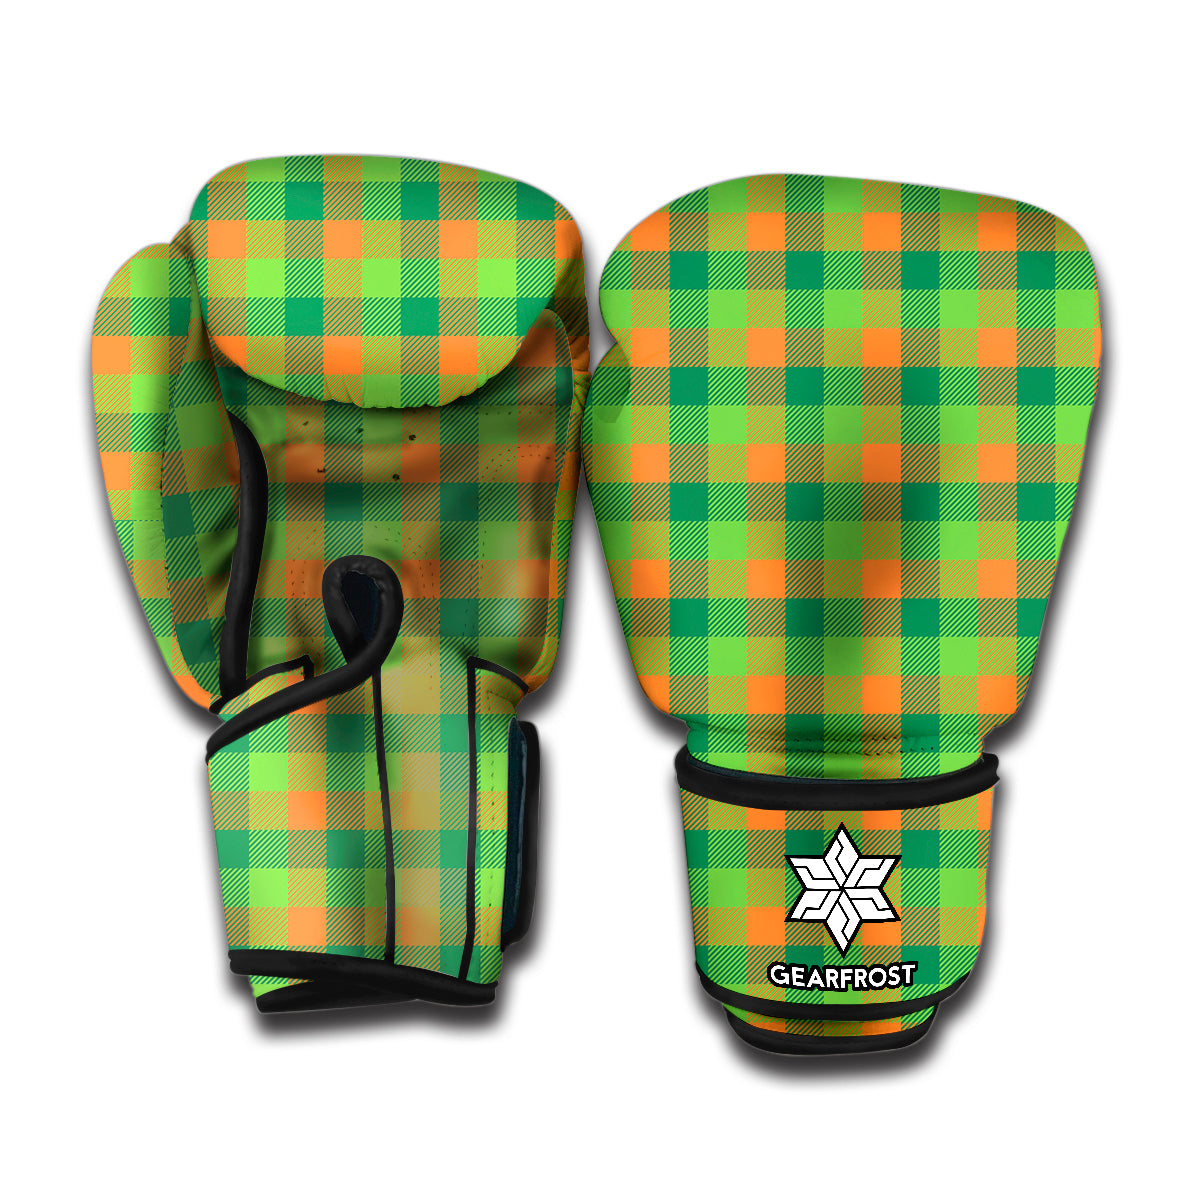 Shamrock Plaid St. Patrick's Day Print Boxing Gloves